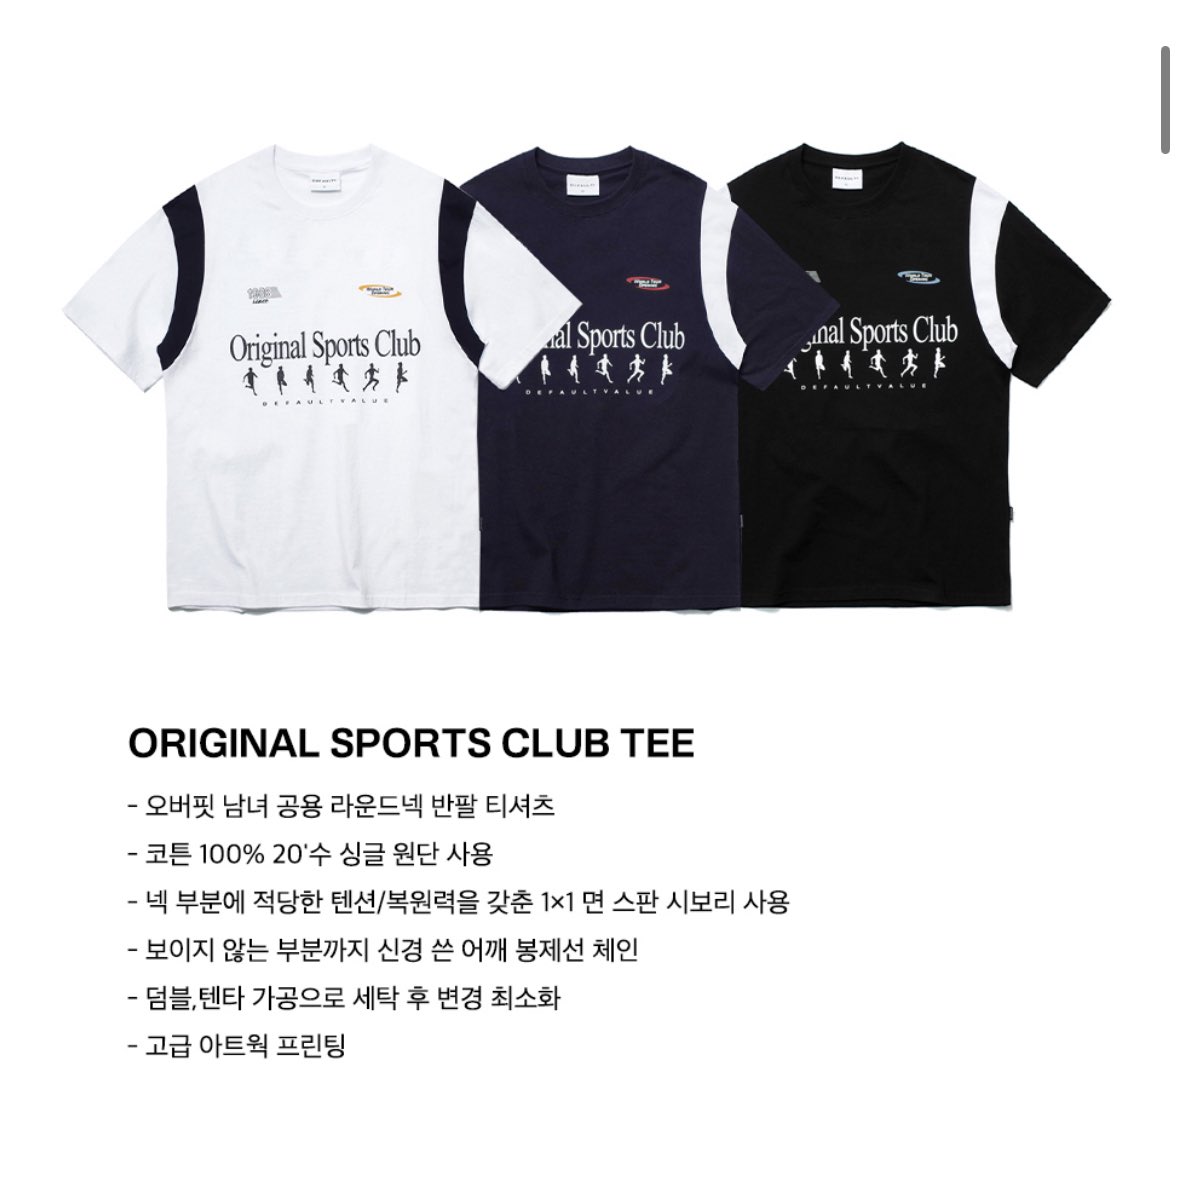 original sports club sale70% 2pack t-shirt ได้2ตัว สามารถเลือกสี&ไซส์ได้ 

เซ็ตละ 890฿ ส่งฟรี